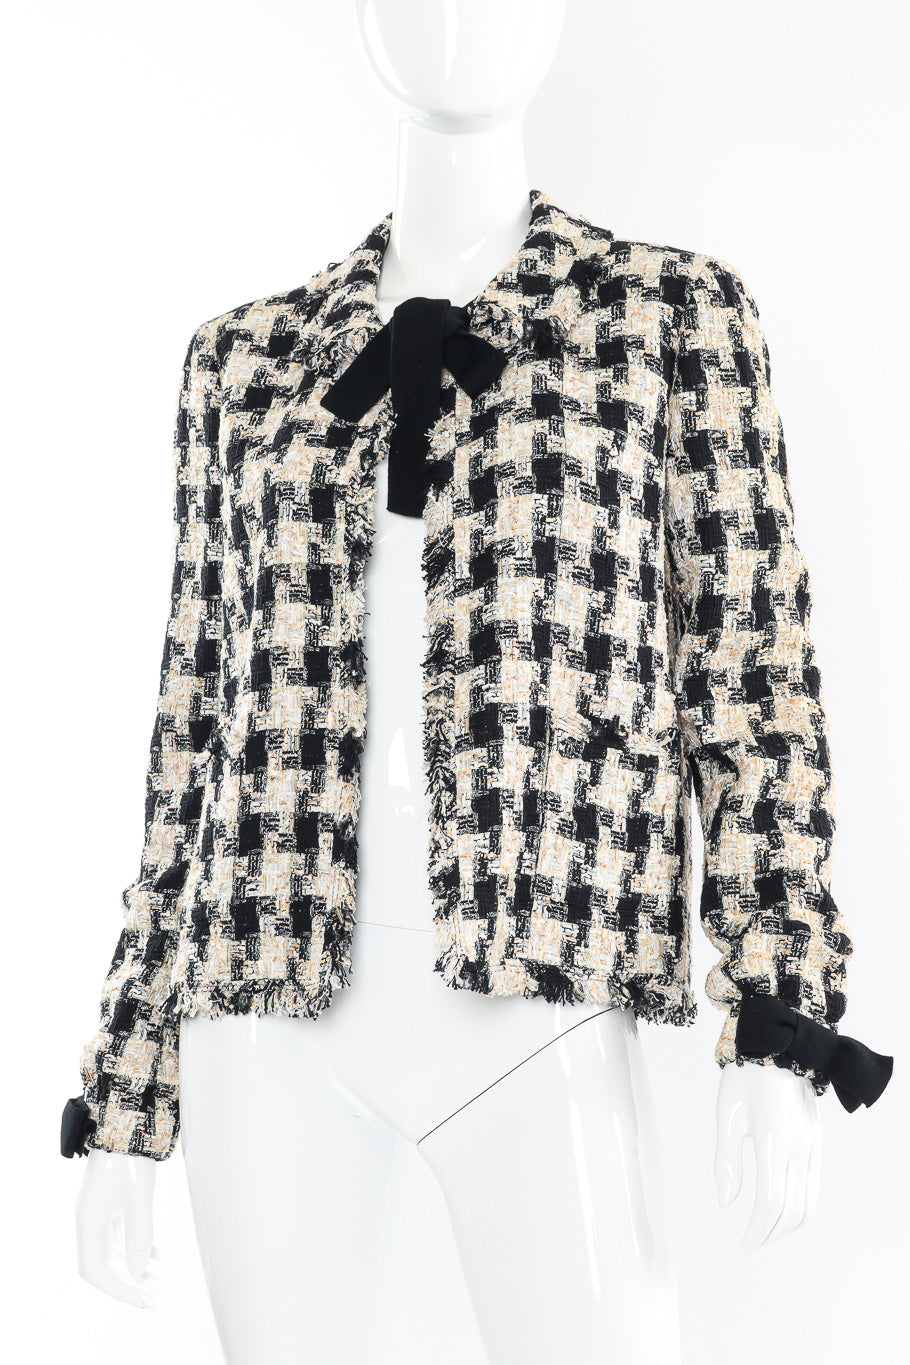 Bouclé check jacket by Chanel mannequin front tied close @recessla